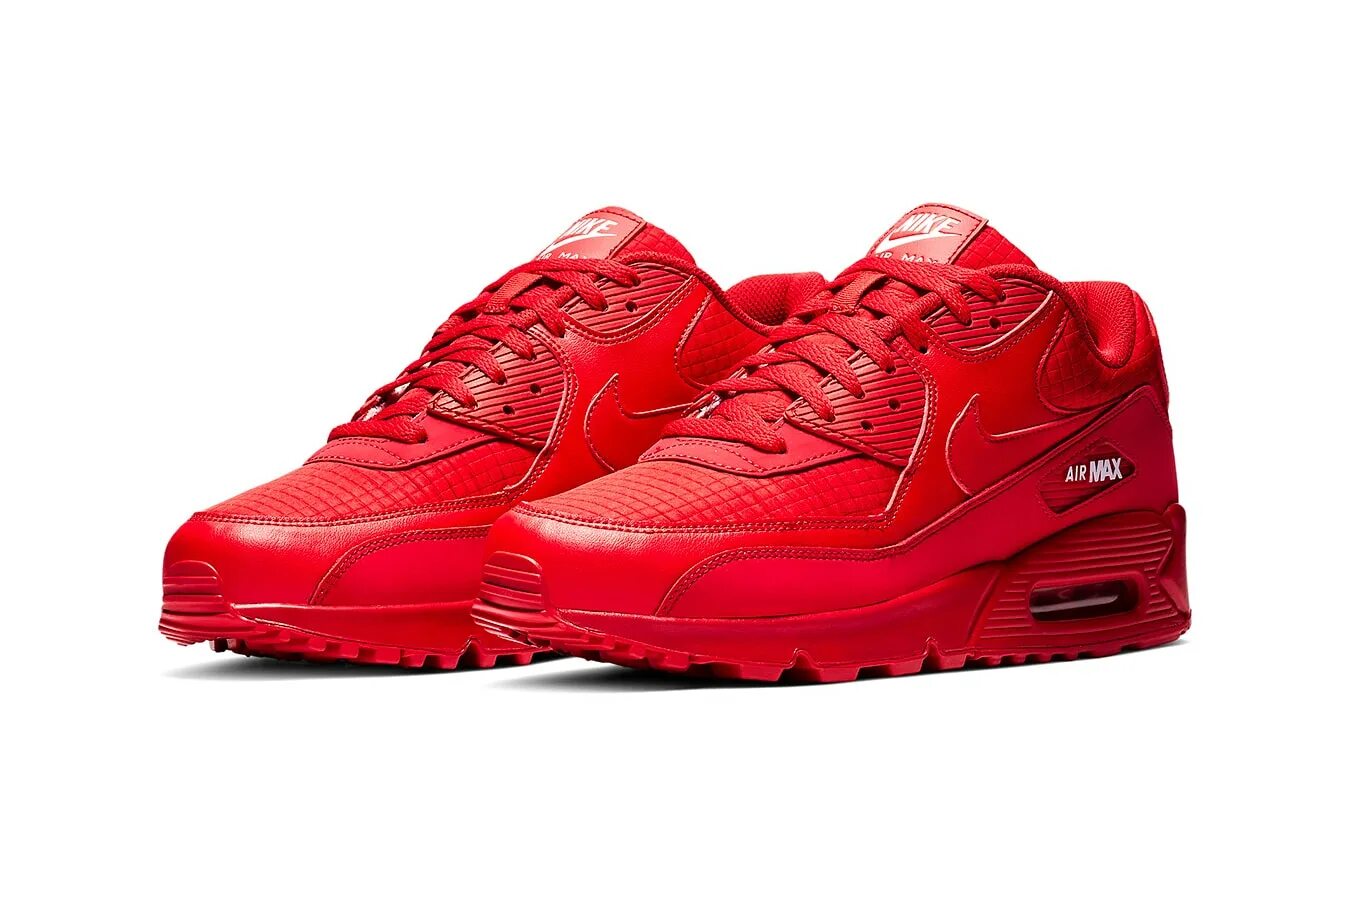 Nike Air Max 90 Red. Nike Air Max красные. Nike Air Max 90 Limited Edition. Nike Air Max 90 мужские красные. Кроссовки nike red